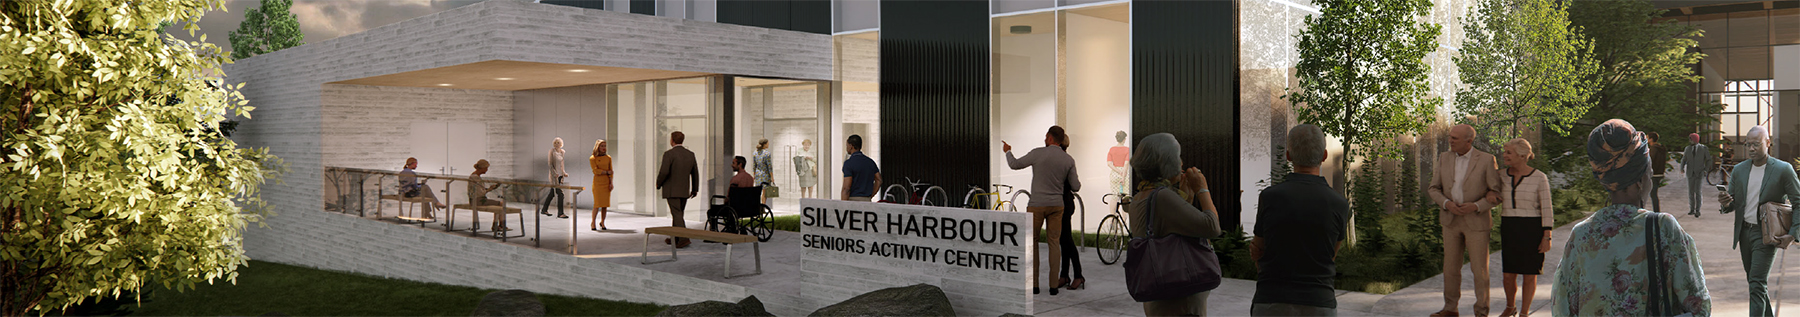 design rendering of Silver Harbour